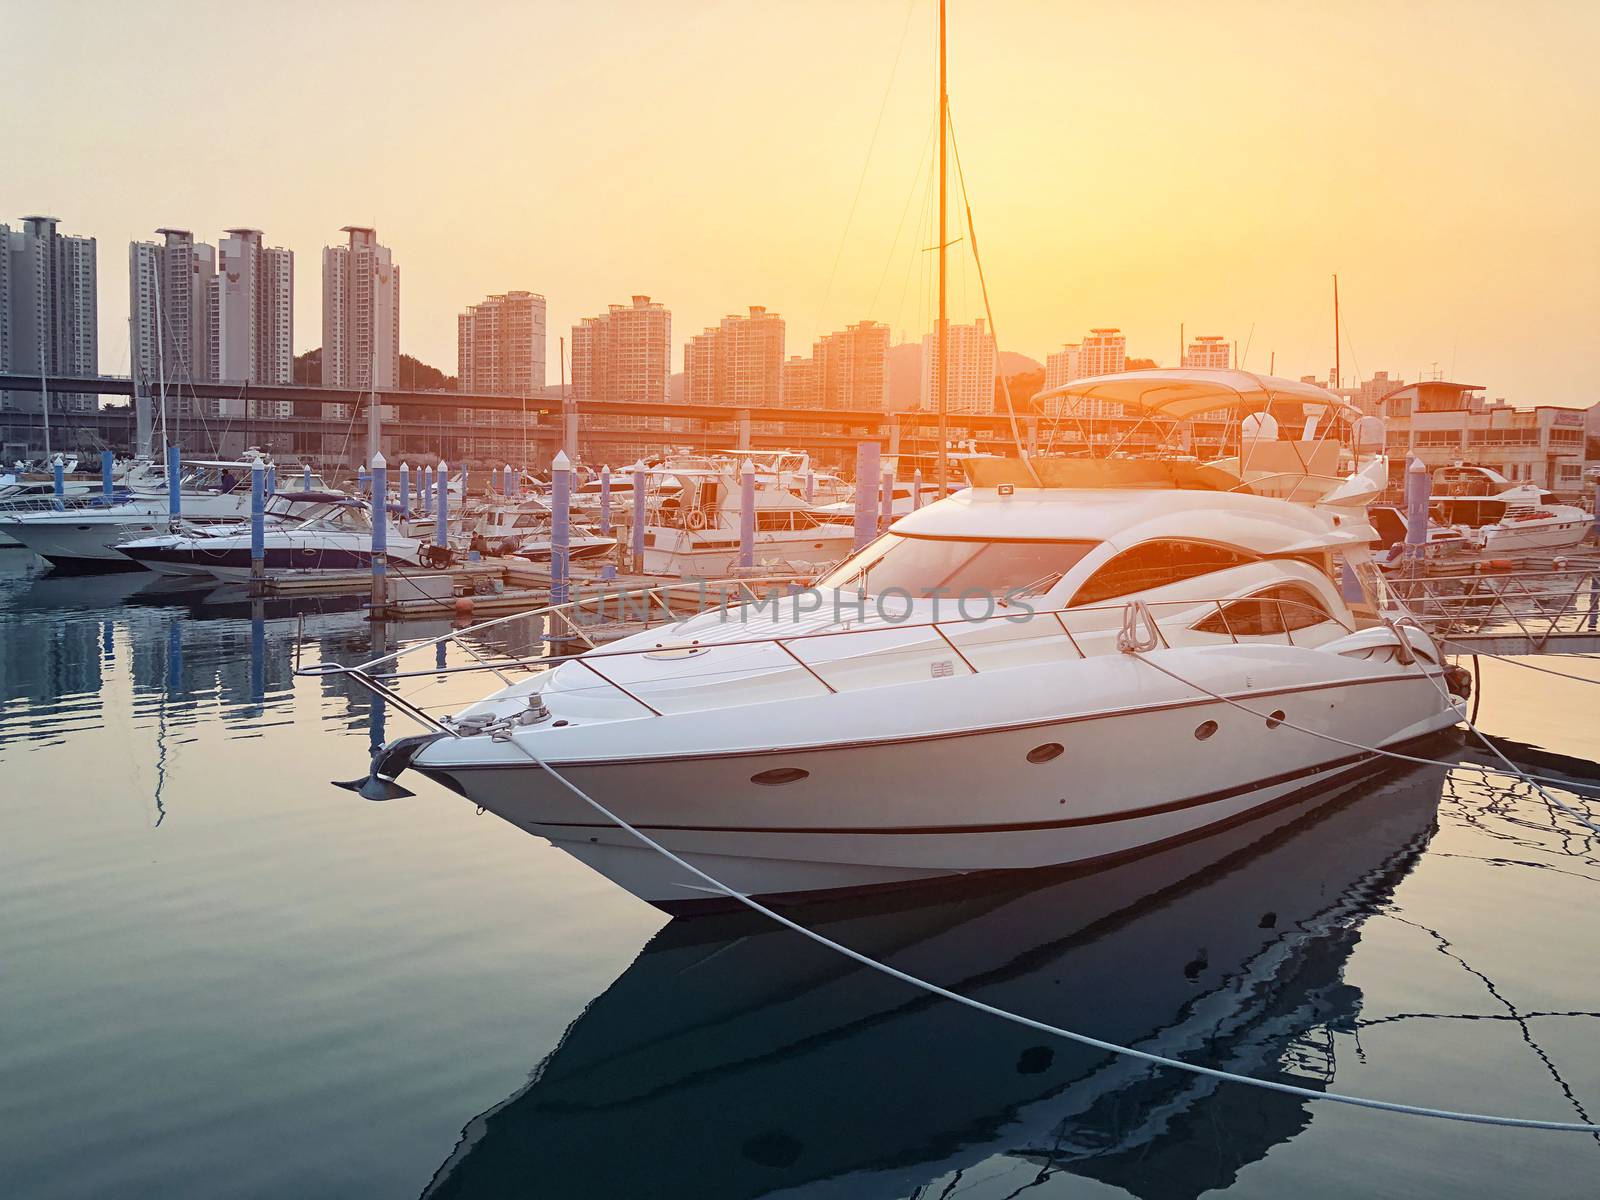 Luxury yachts docked in sea port at sunset in Seoul, Korea by Surasak